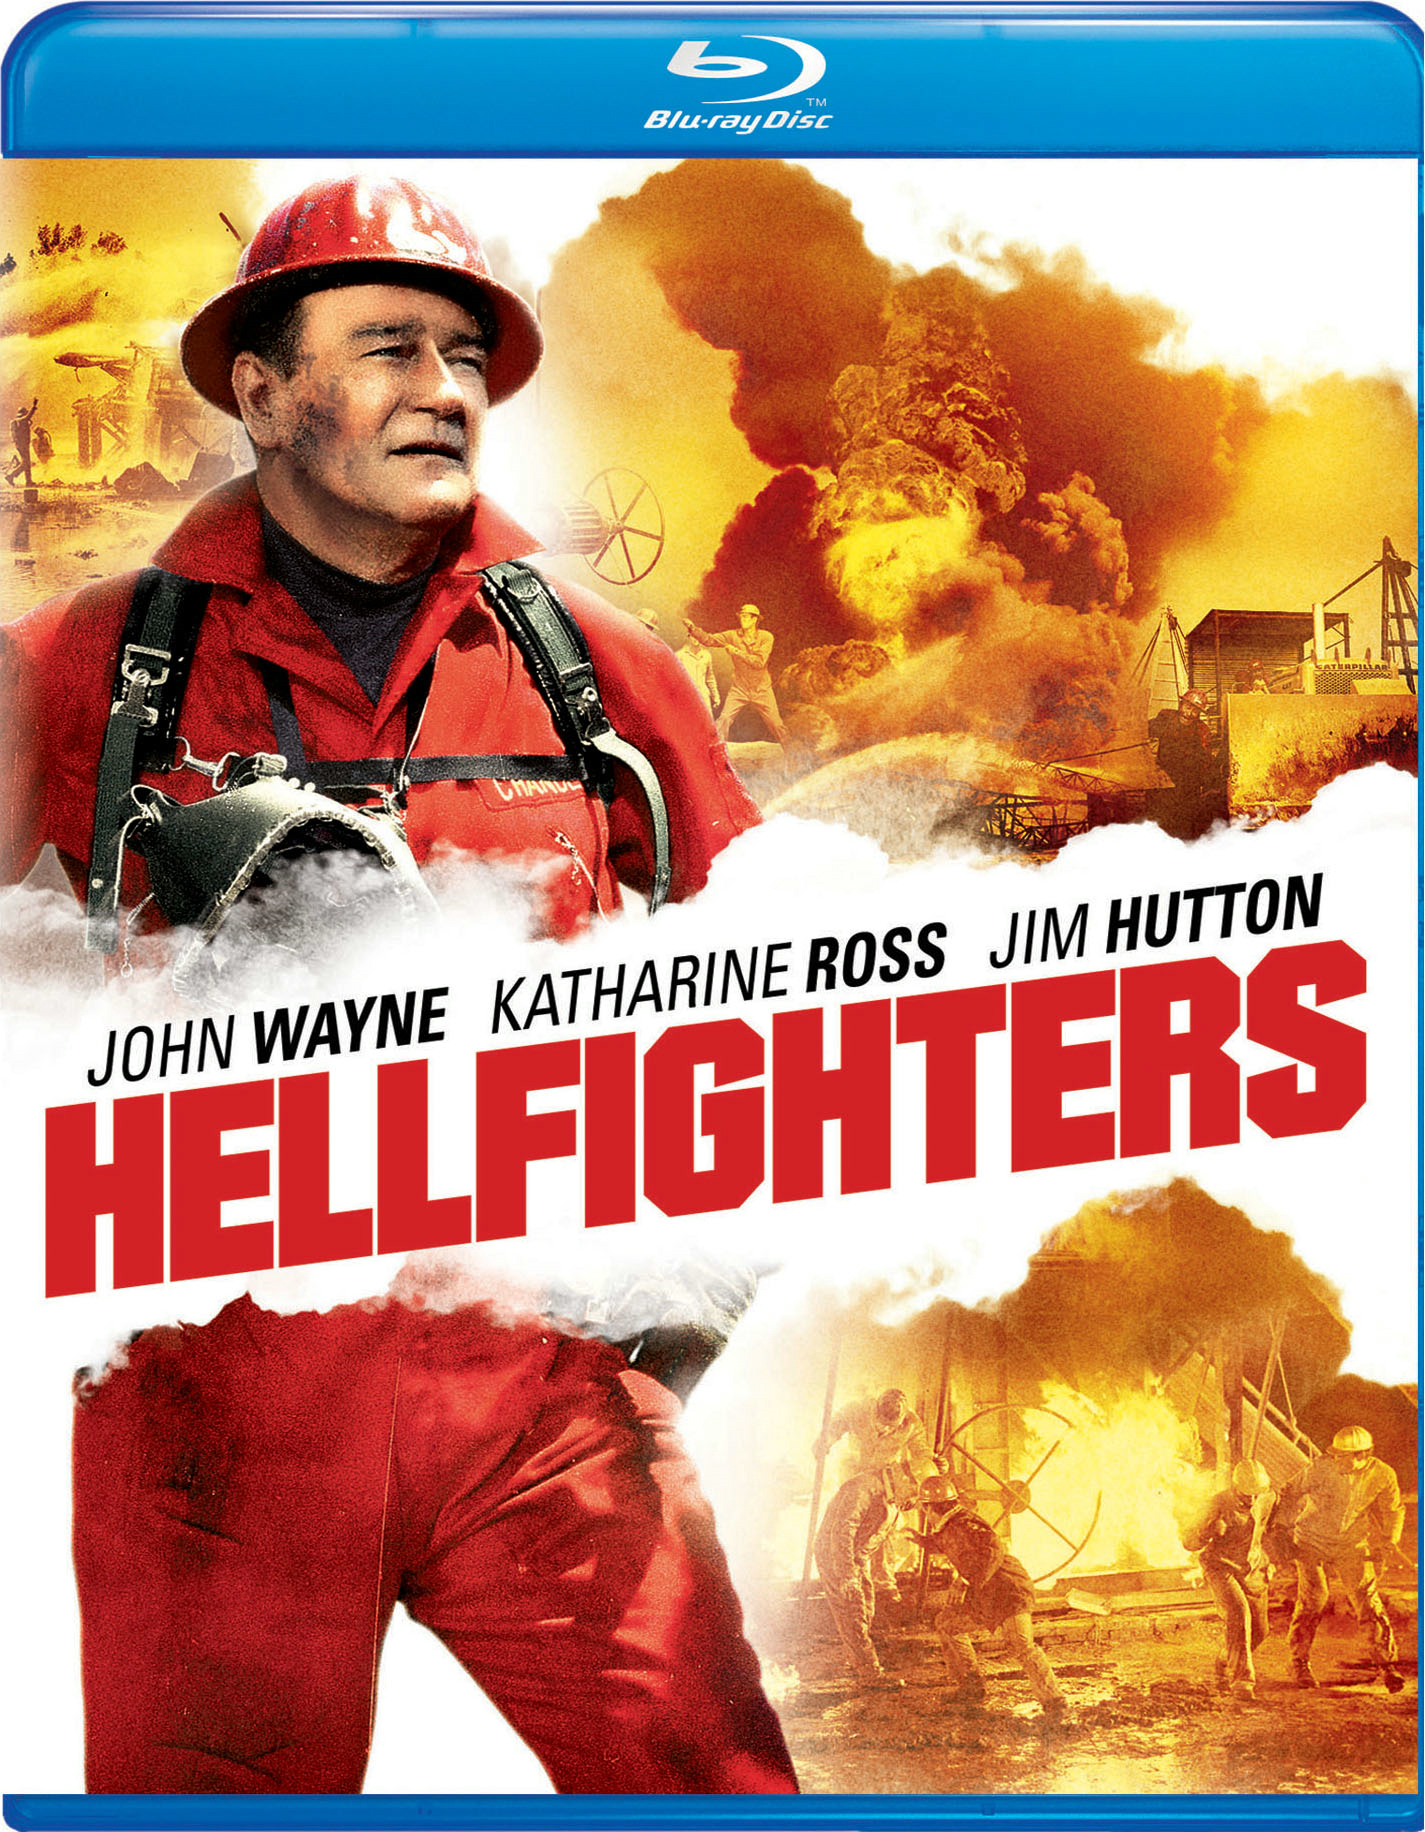 Hellfighters - Blu-ray [ 1968 ]  - Modern Classic Movies On Blu-ray - Movies On GRUV